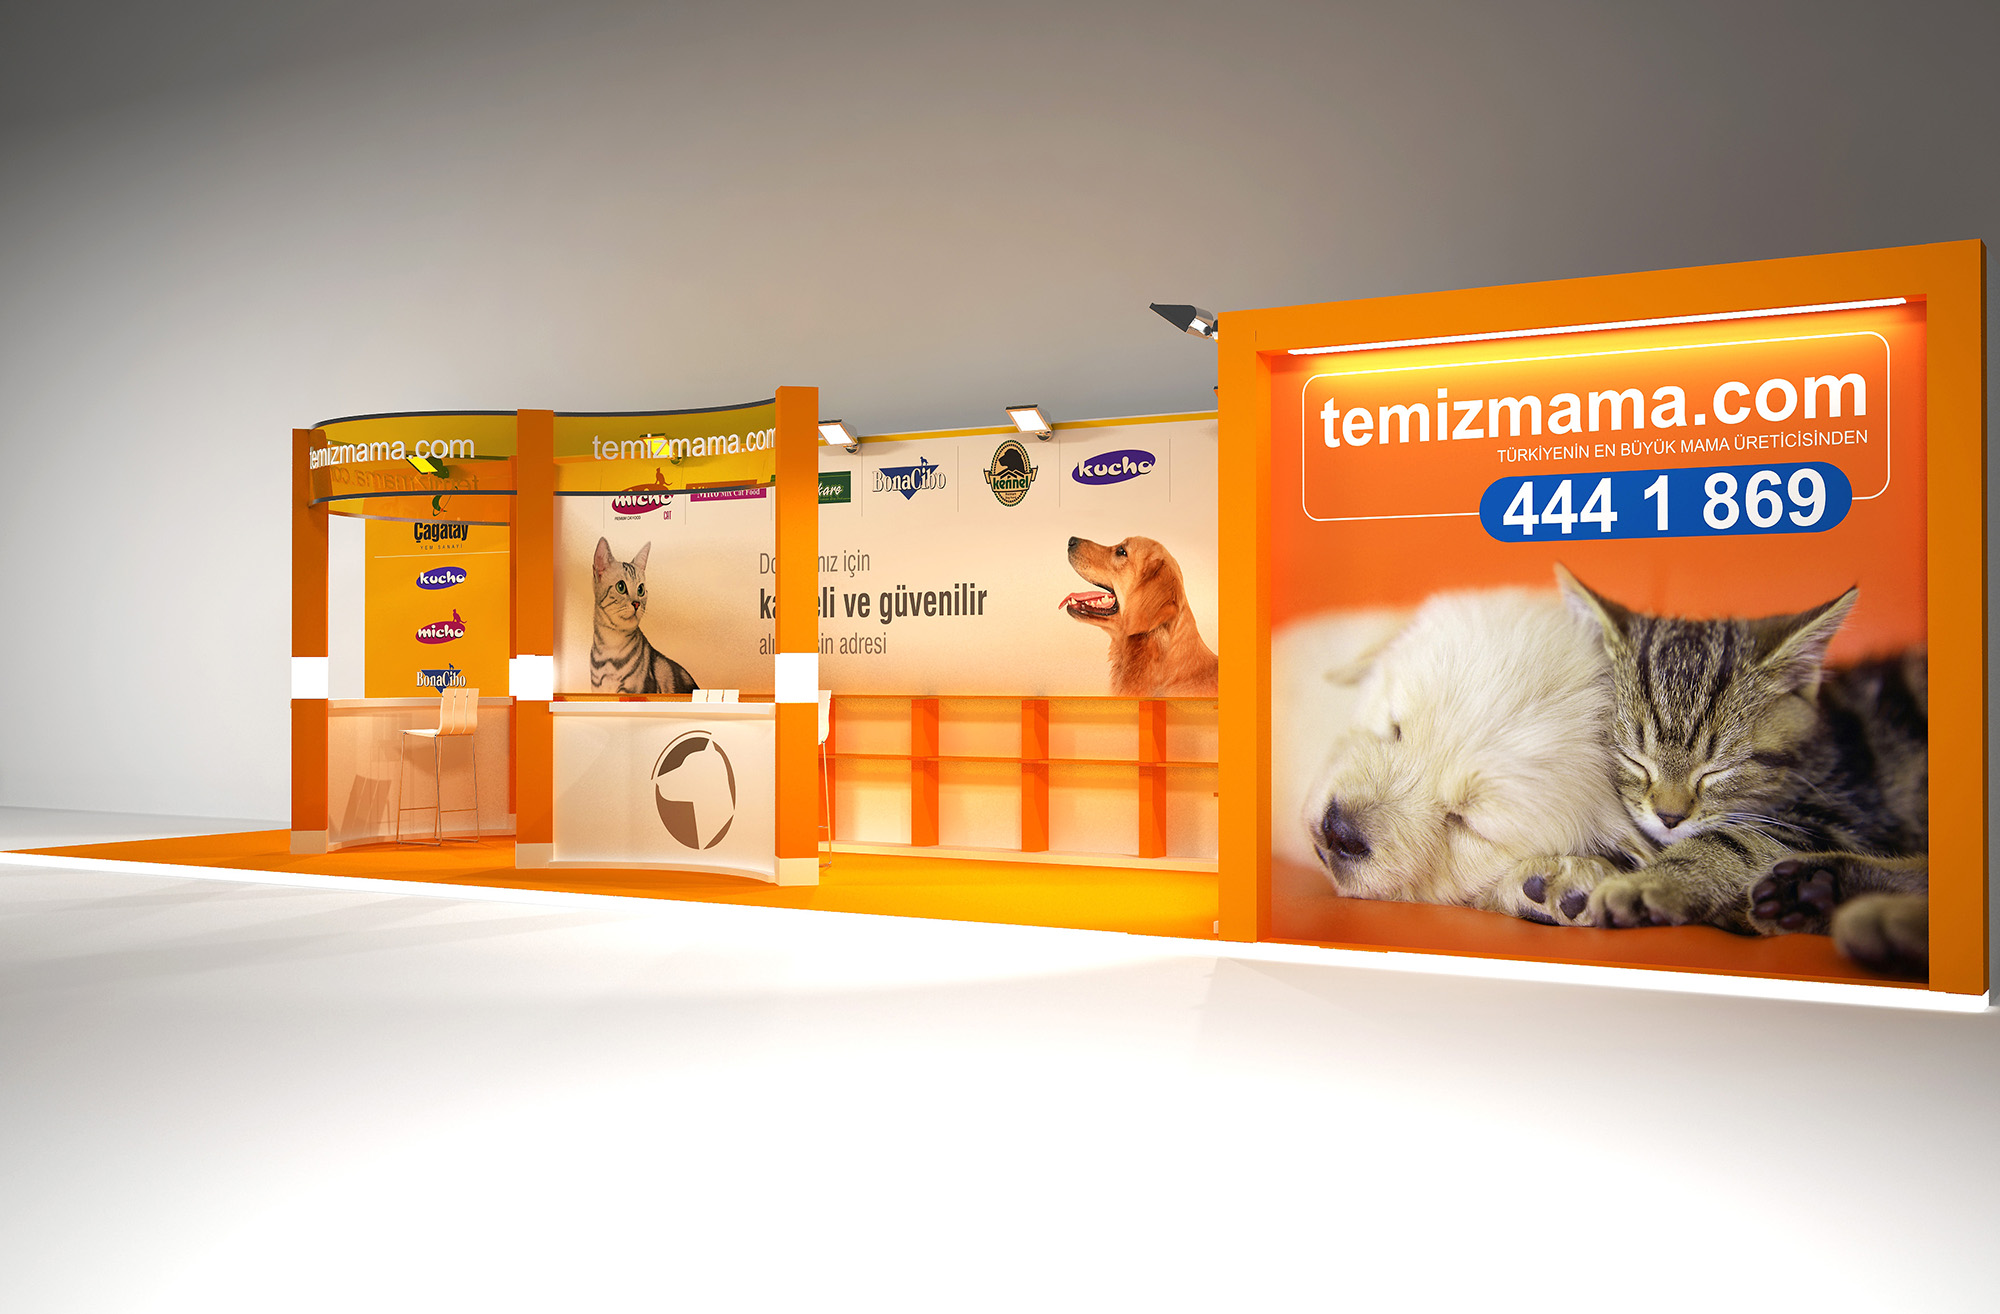 Temizmama Exhibition Stand 2 - KONSEPTIZ Advertising Agency in Turkey